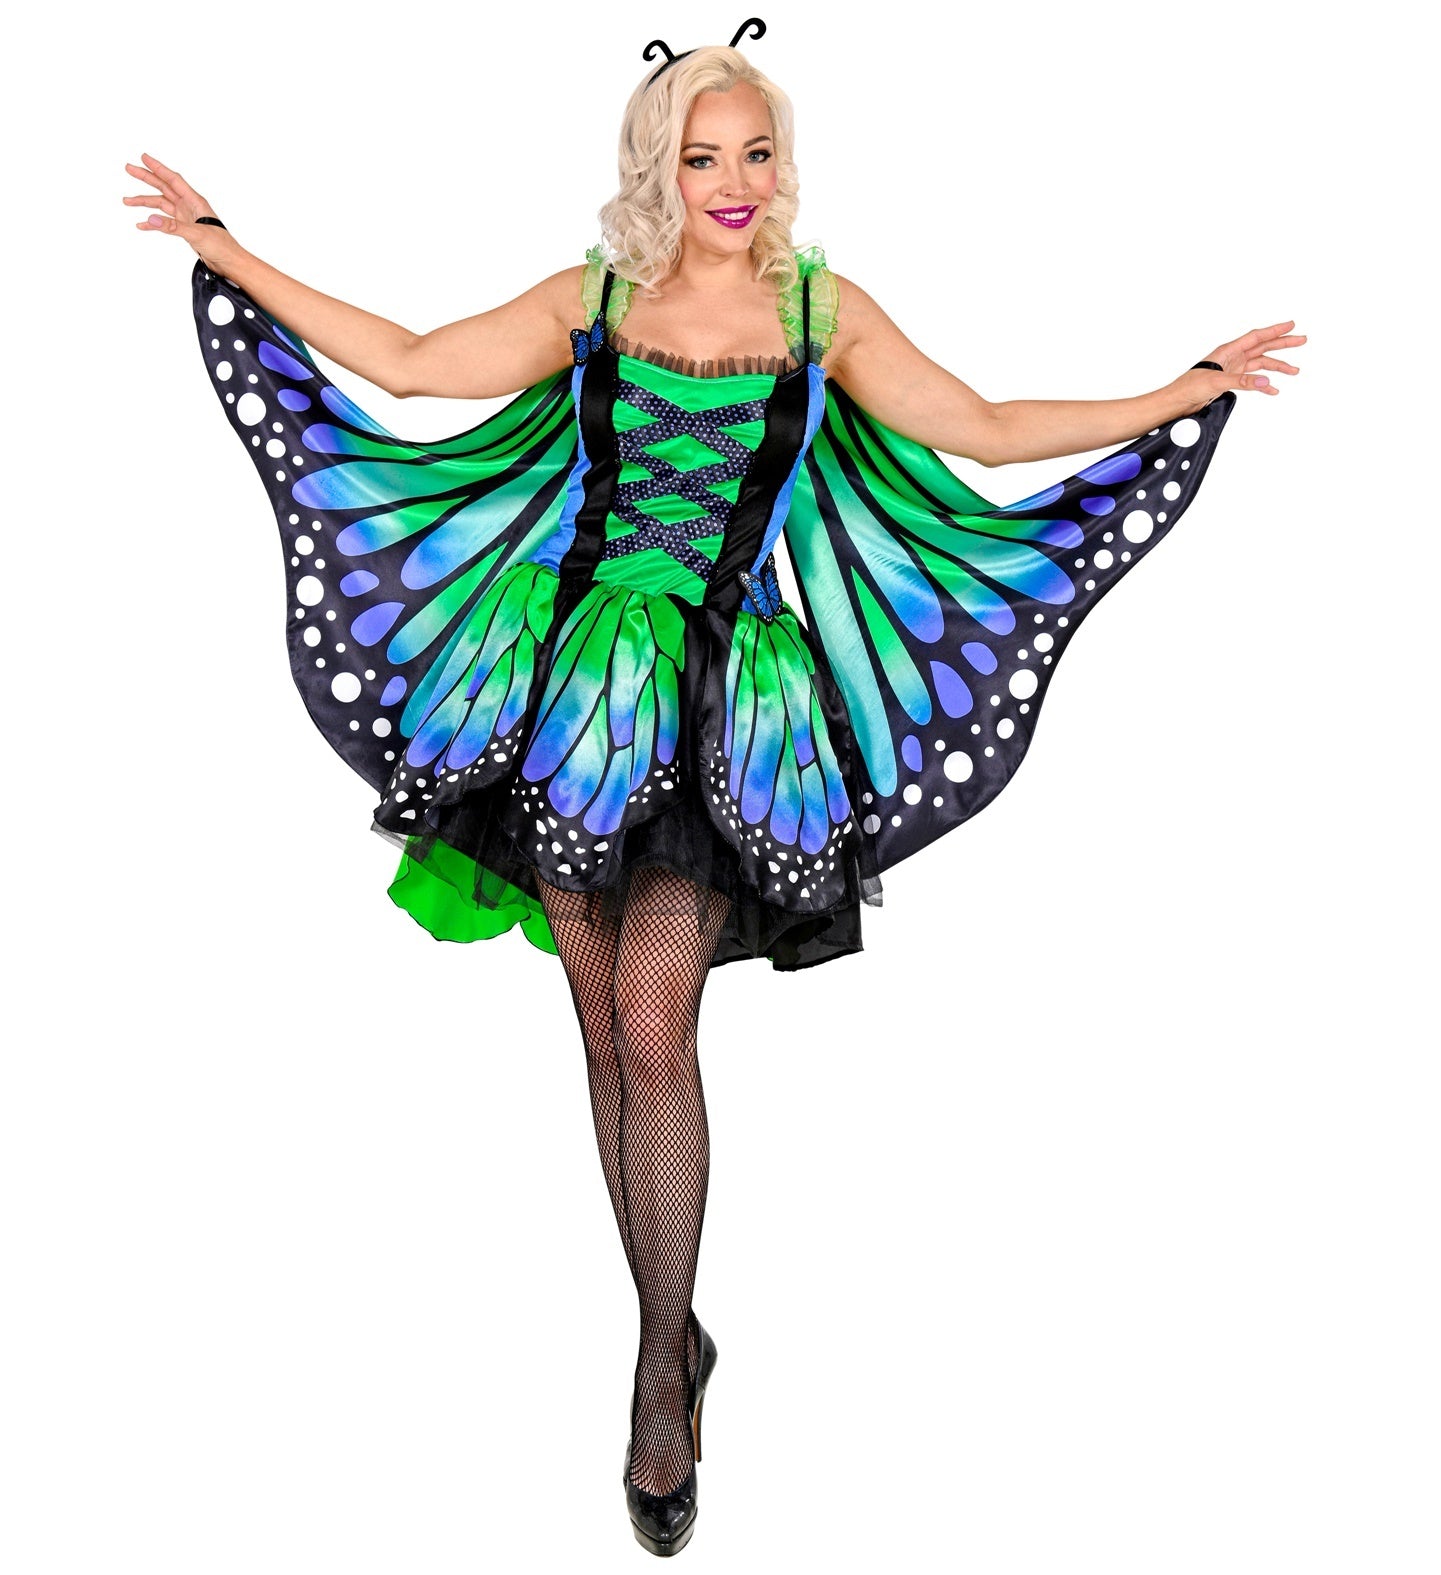 Widmann - Vlinder Kostuum - Sierlijke Fladder Vlinder Veronique - Vrouw - Blauw, Groen - Small - Carnavalskleding - Verkleedkleding